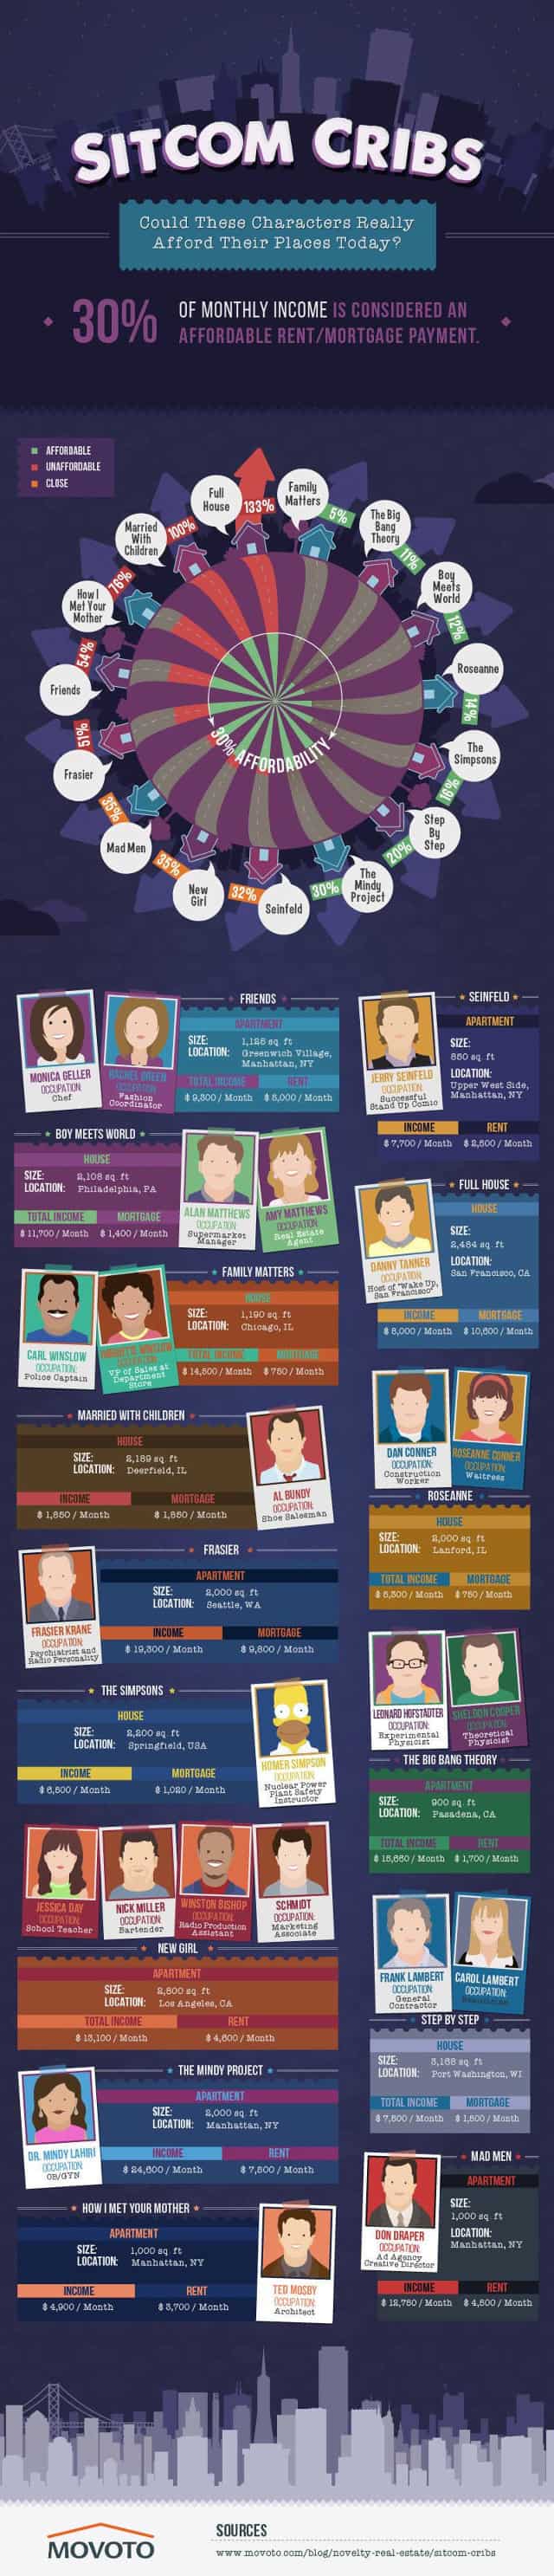 Sitcom Cribs Infographic